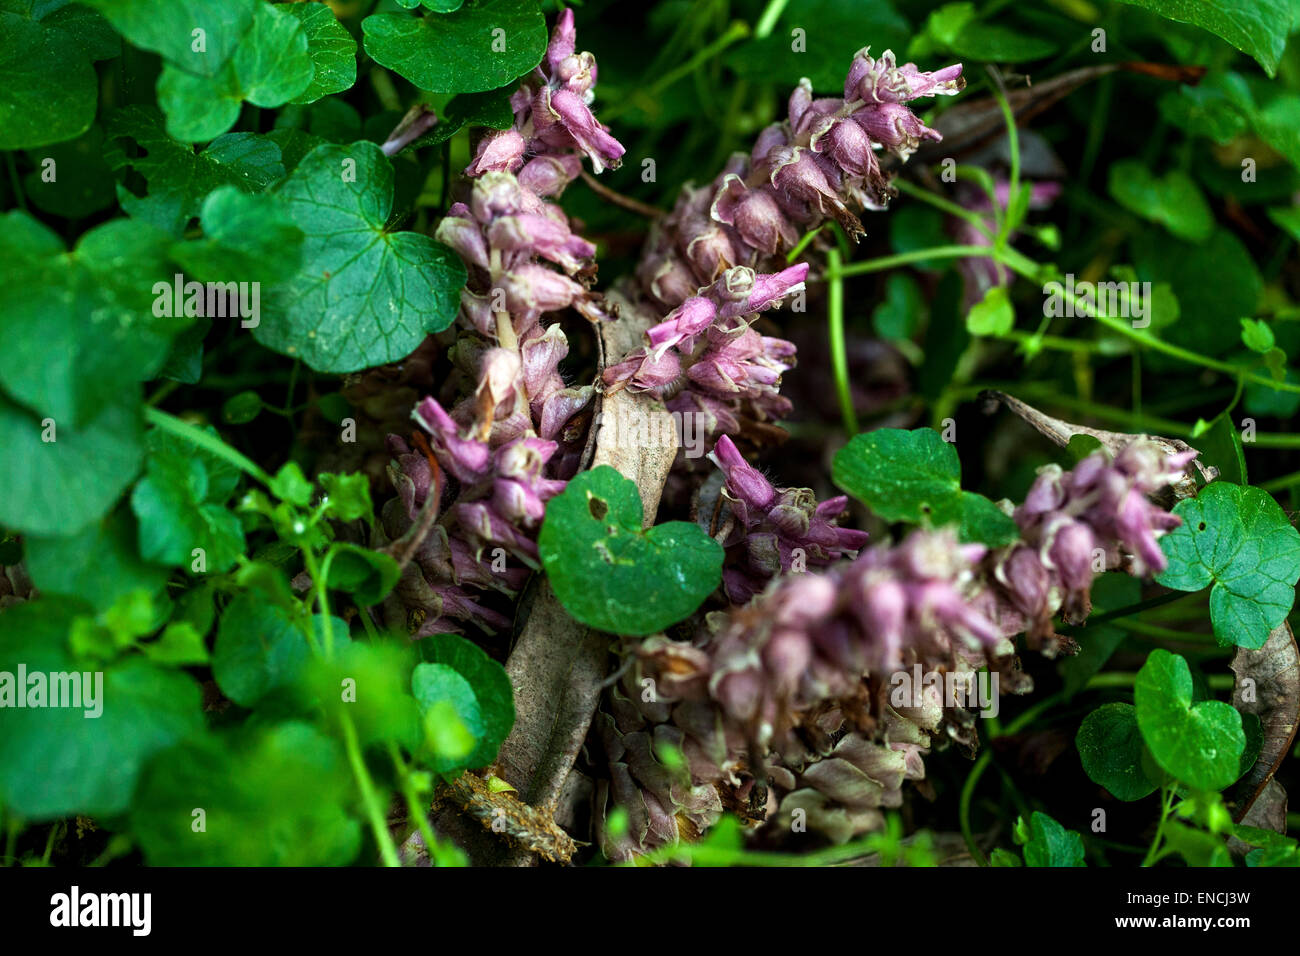 Toothwort, Lathraea squamaria flowering plant - parasite, parasitic on the roots of deciduous trees Stock Photo